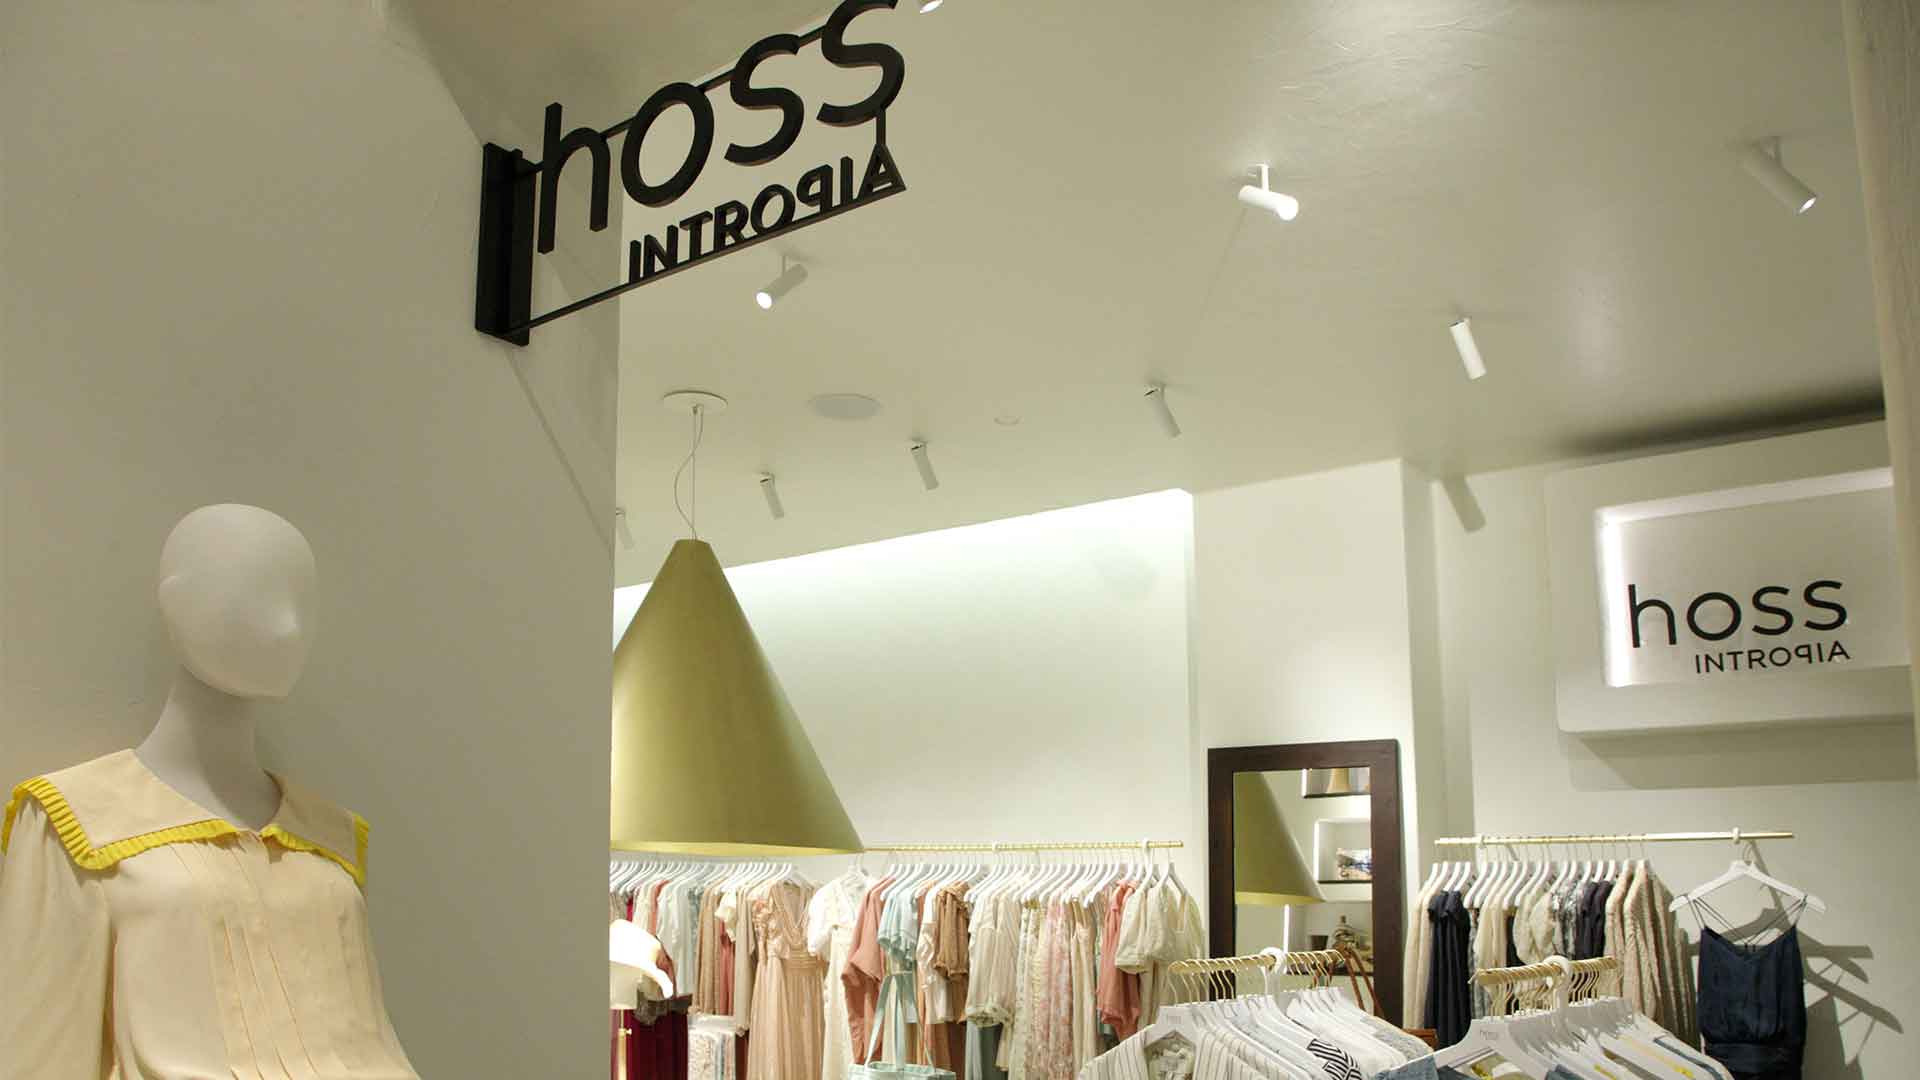 Shopfitting and renovation of stores for Hoss Intropia